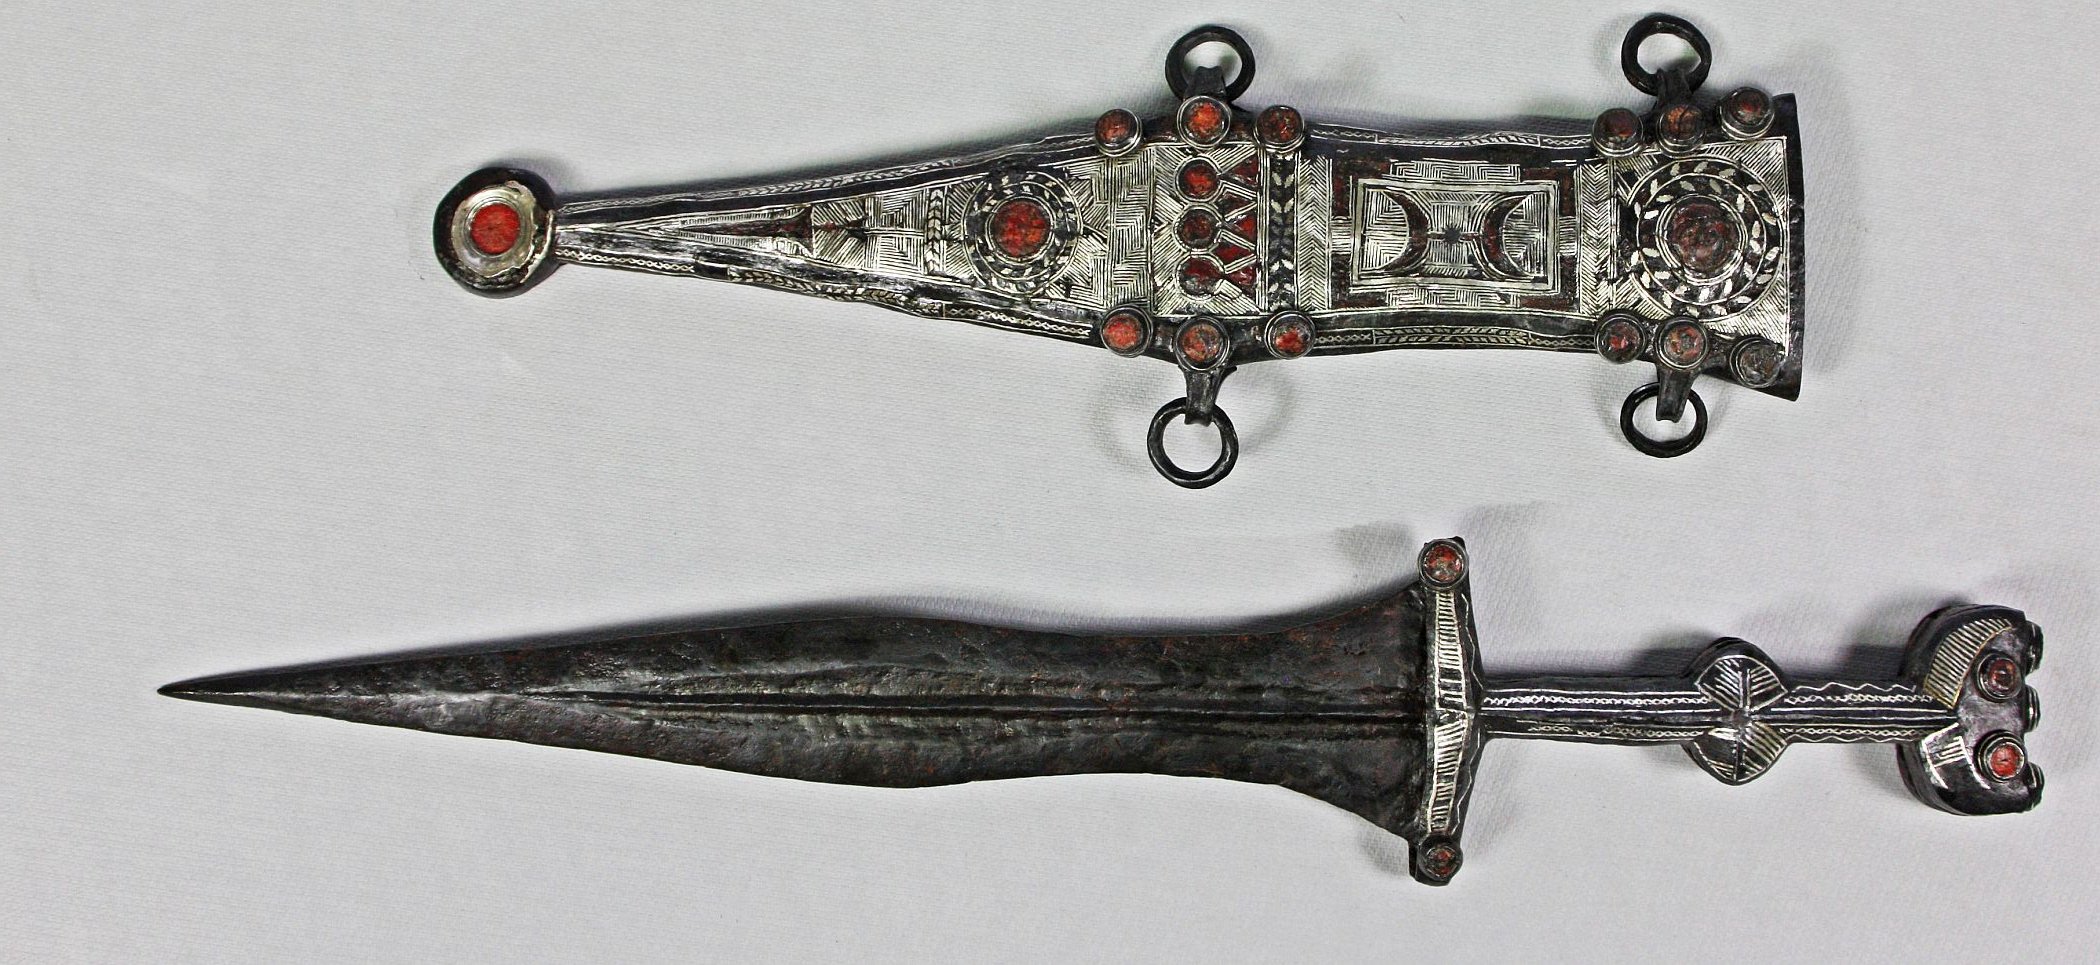 The restored dagger